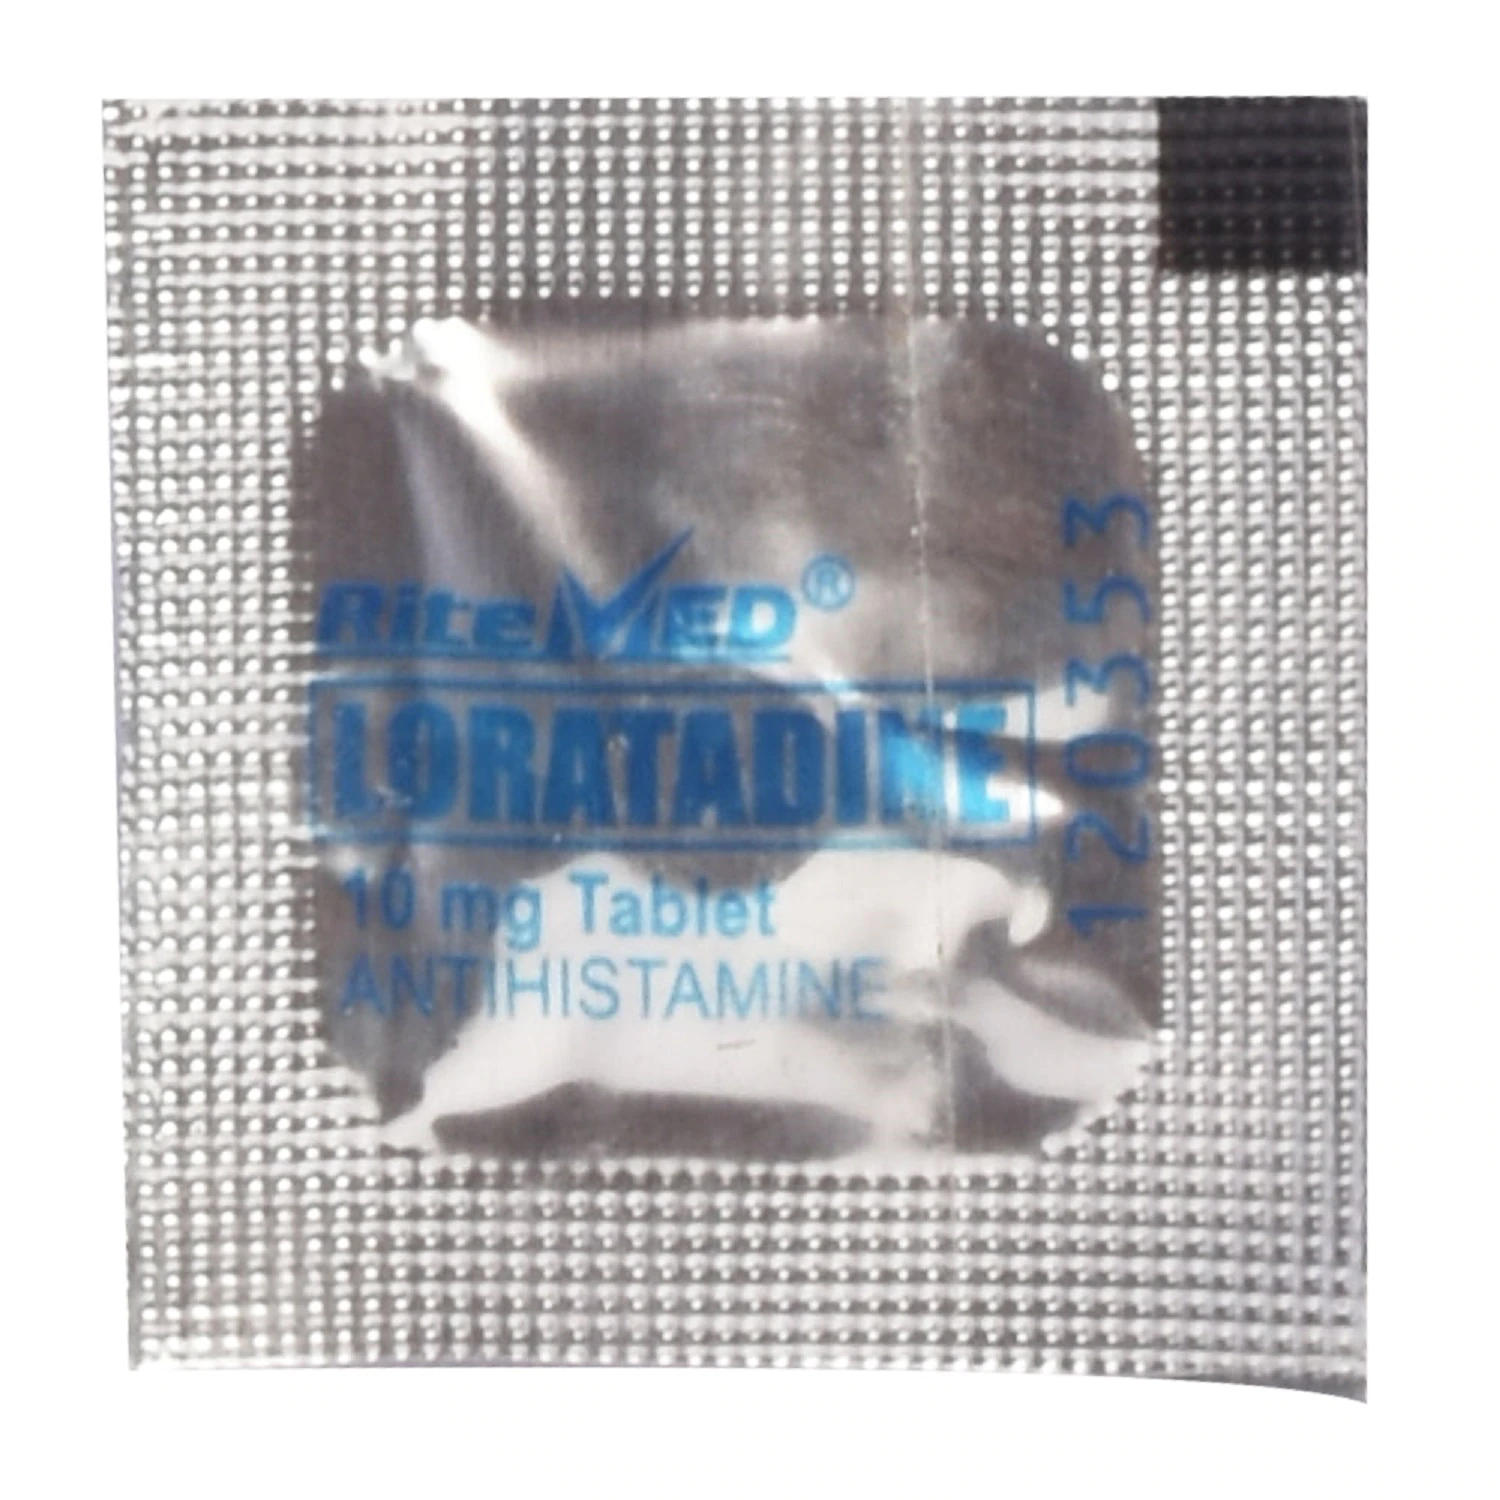 Ritemed, Loratadine 10mg Tablet